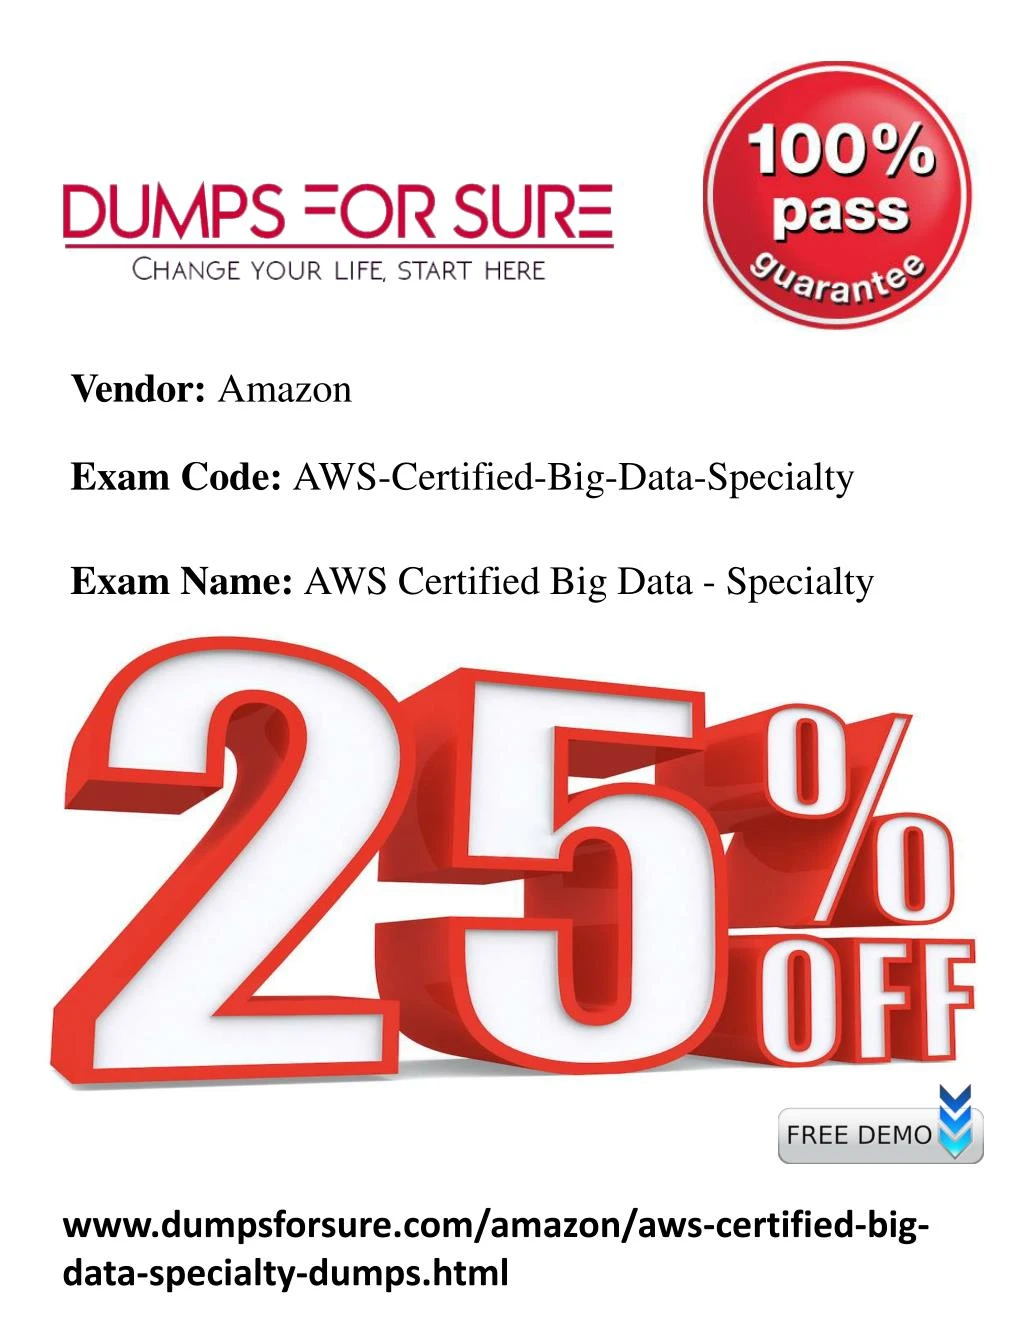 vendor amazon exam code aws certified big data